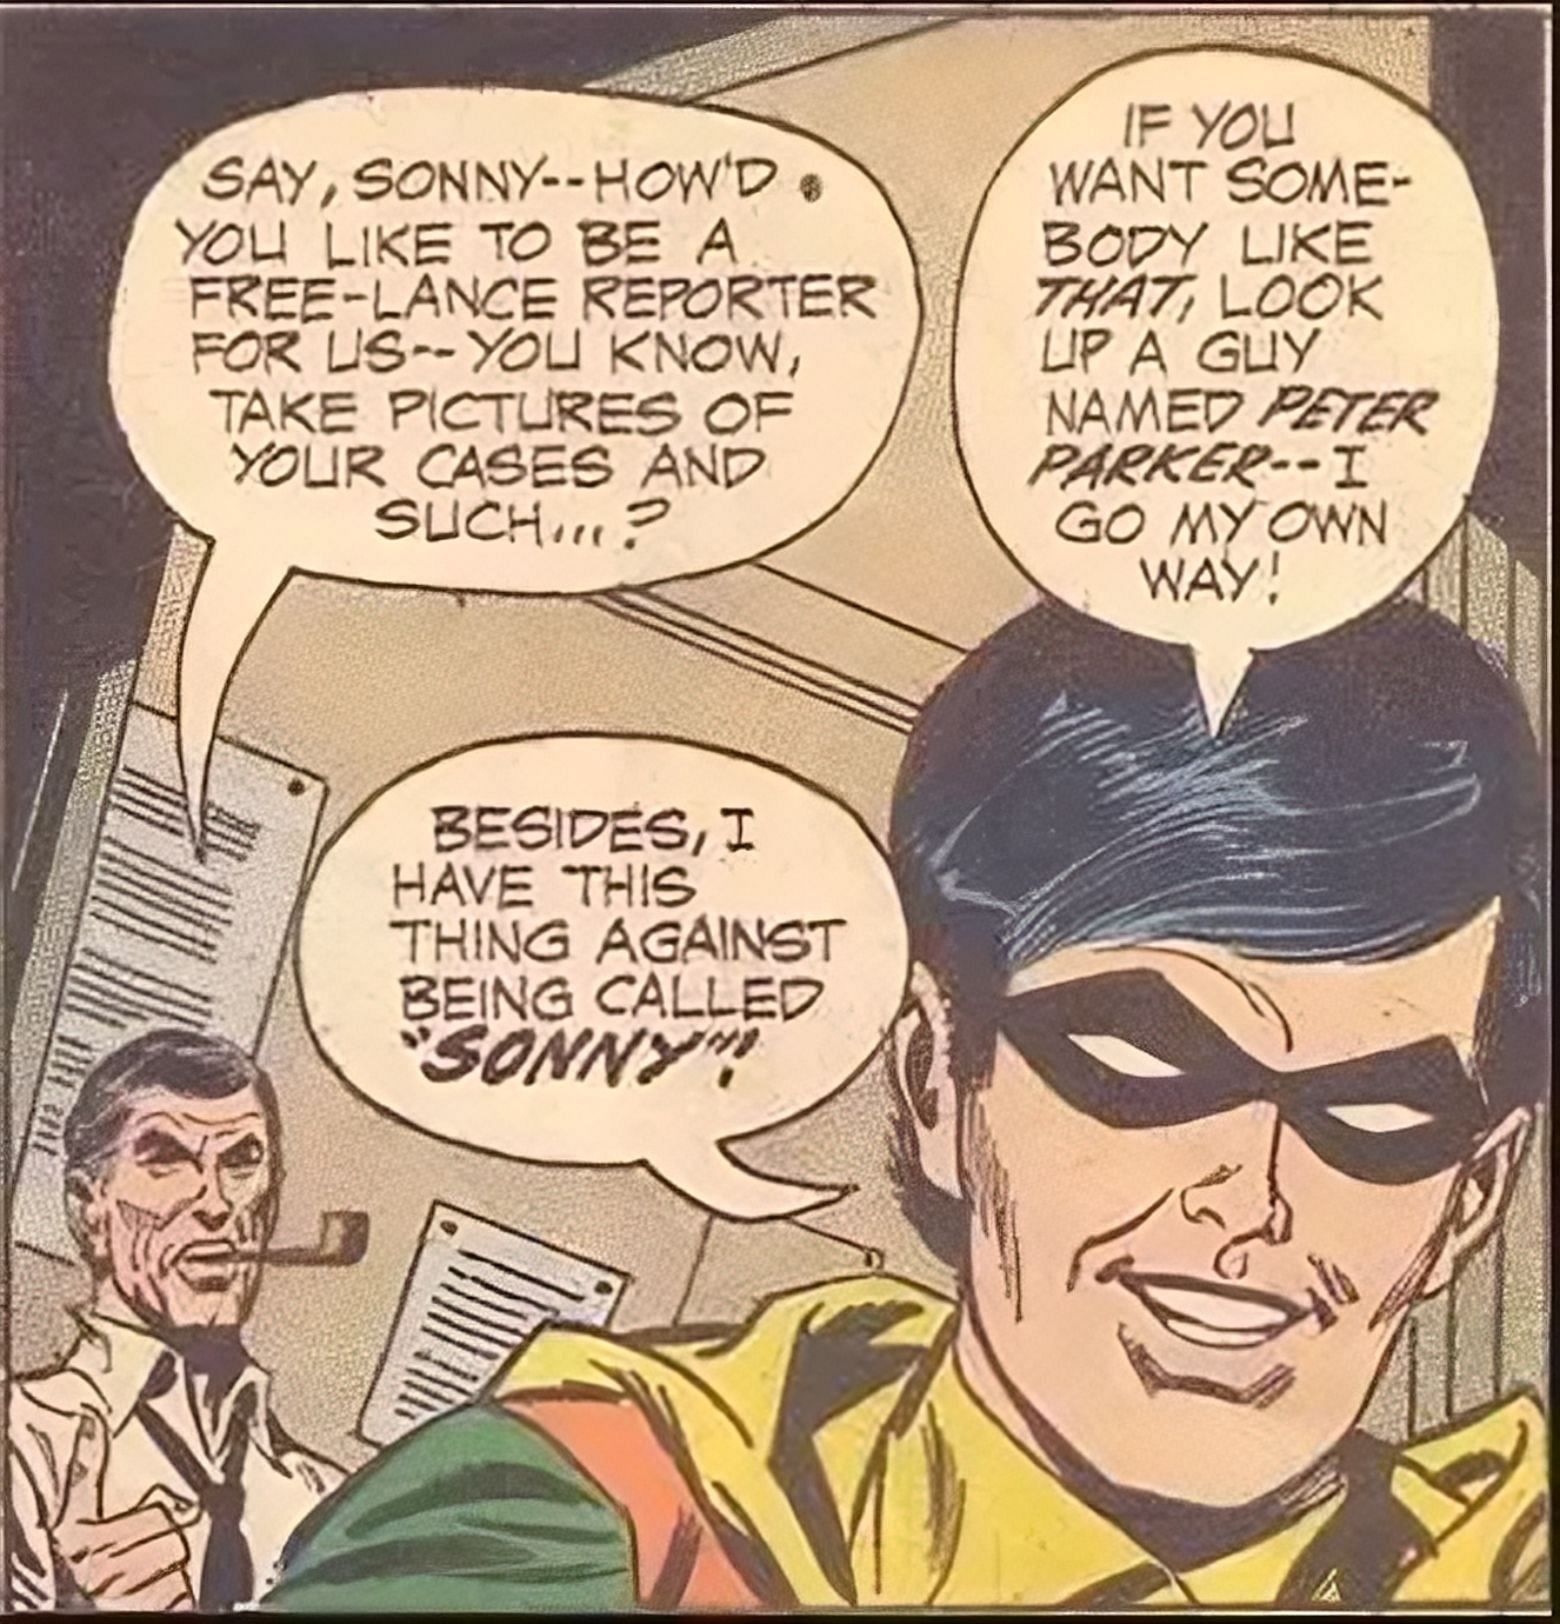 Robin mentioning Peter Parker (Image via DC Comics)